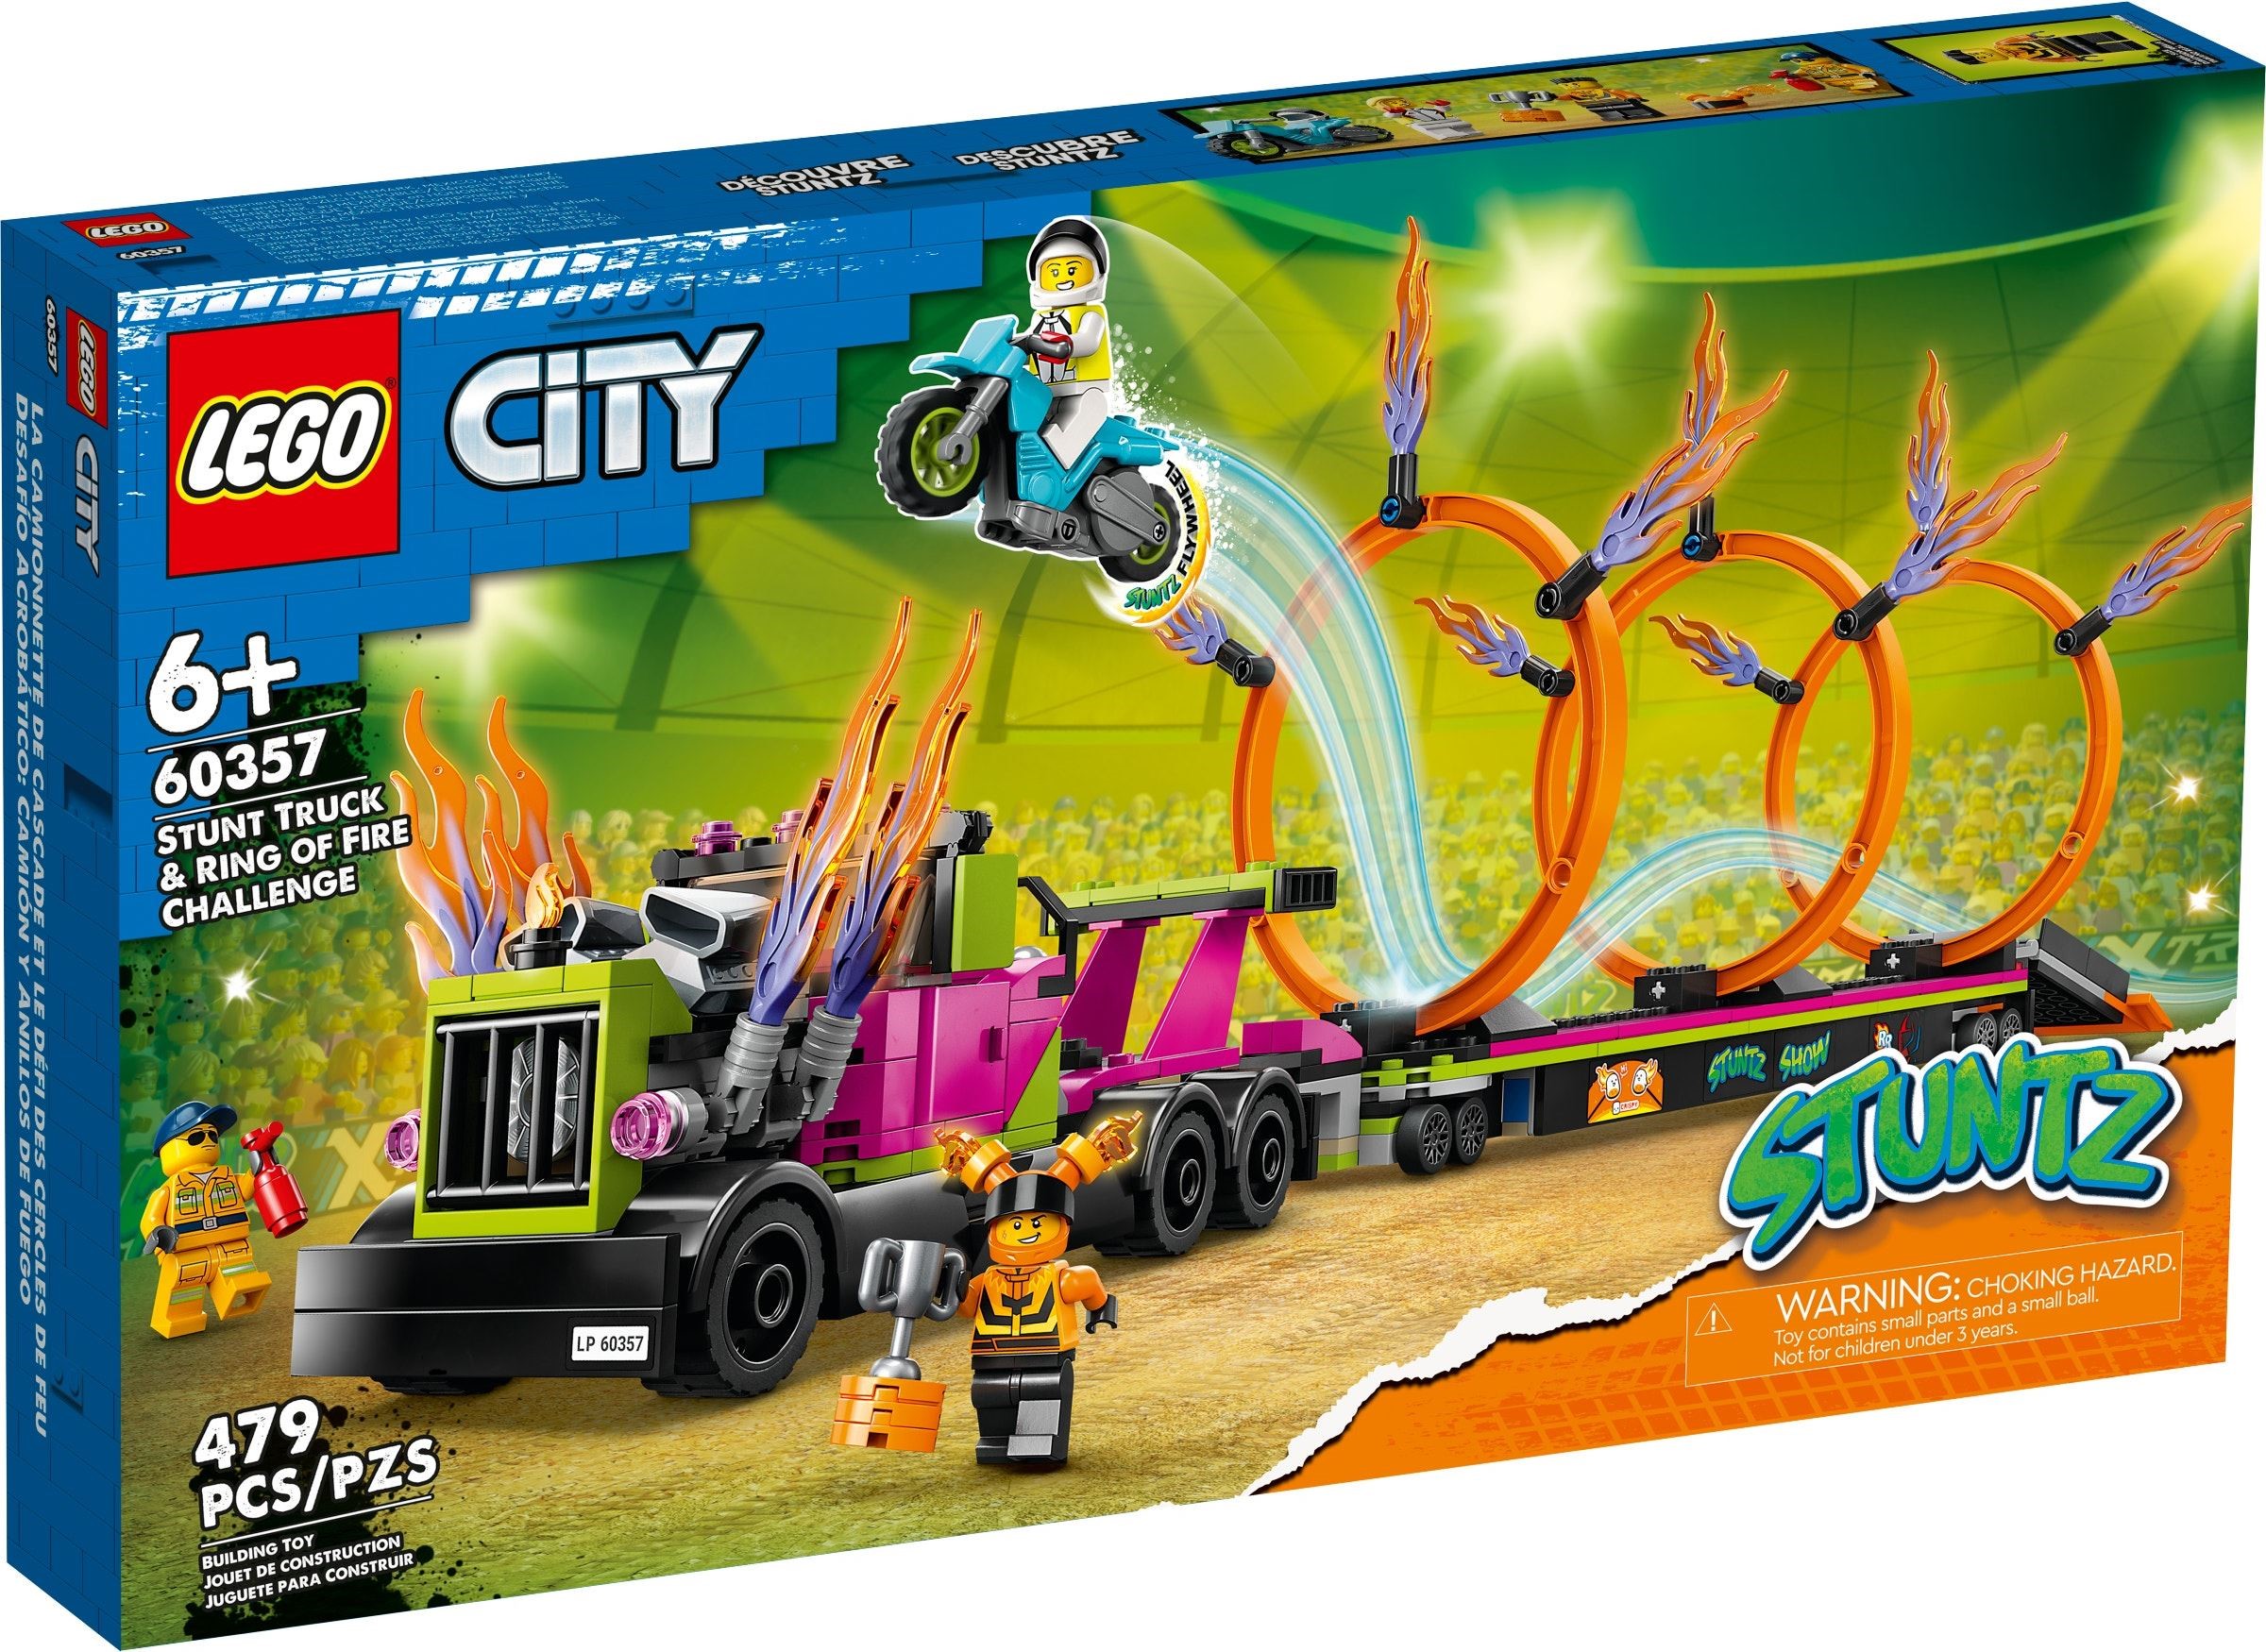 60357 Stunt Truck & Ring of Fire Challenge, Brickipedia